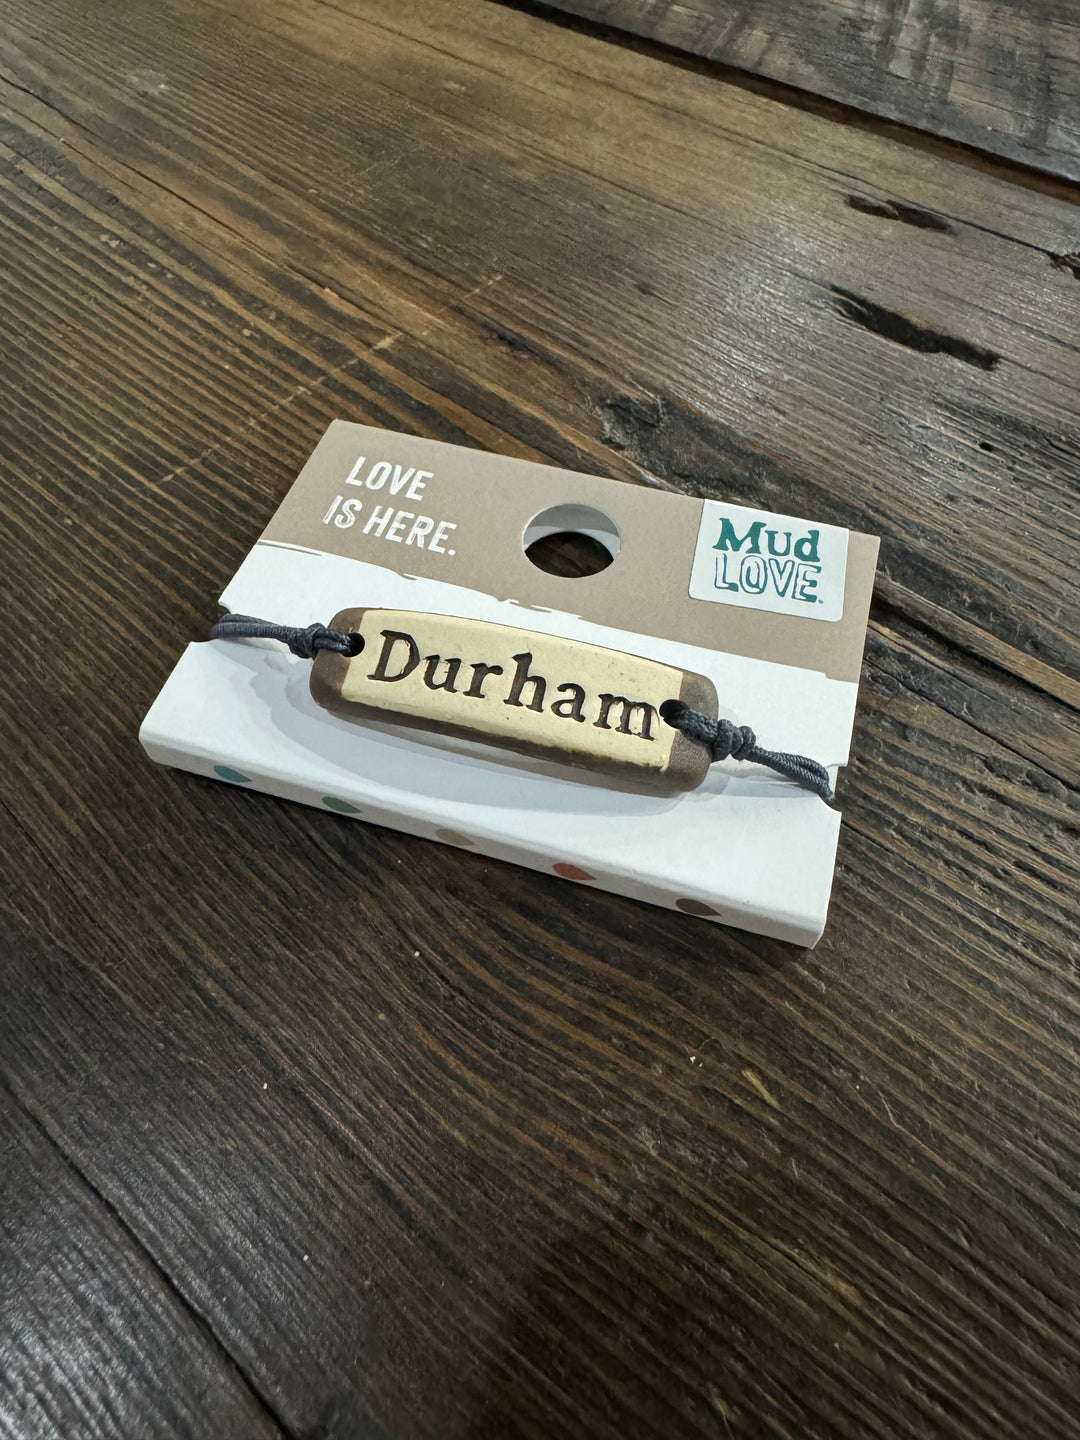 Durham Bracelet